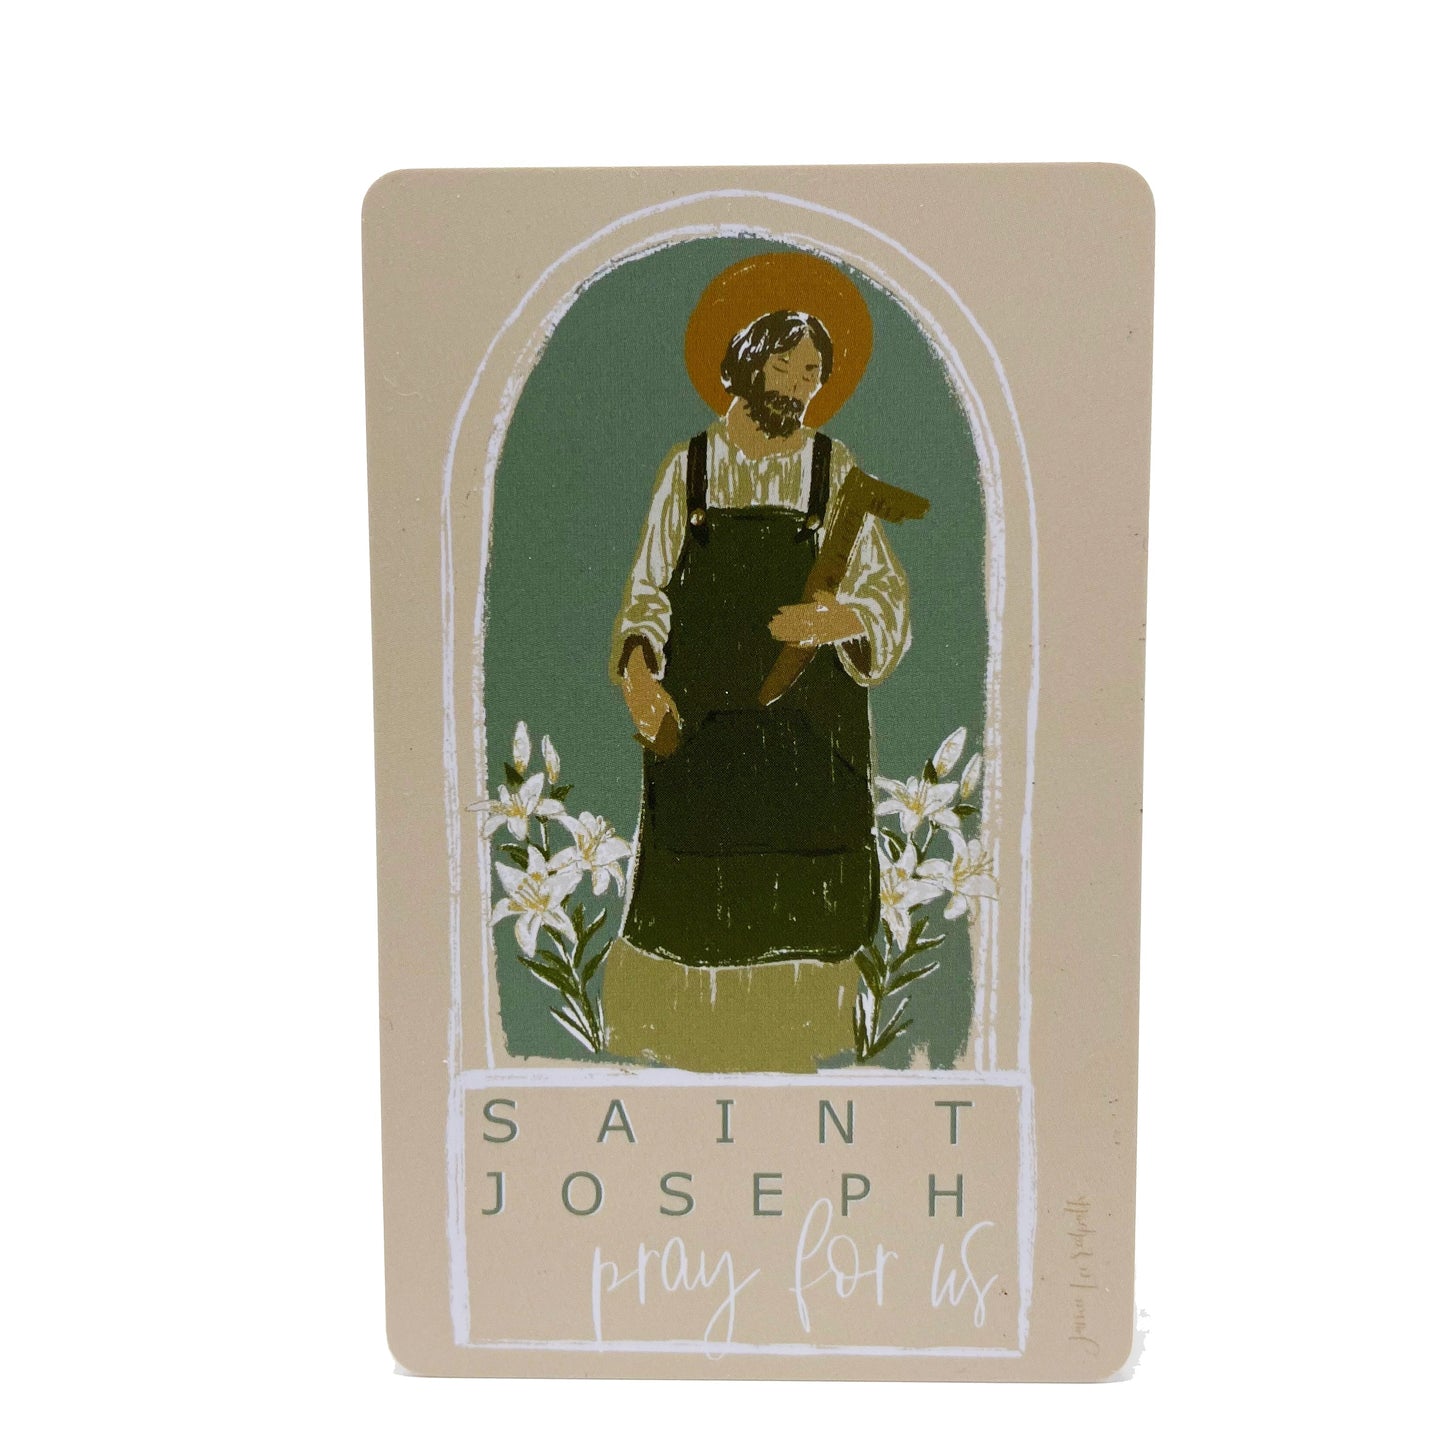 St. Joseph Prayer Cards - Durable Plastic Wallet Sized Holy Cards (25 pk)